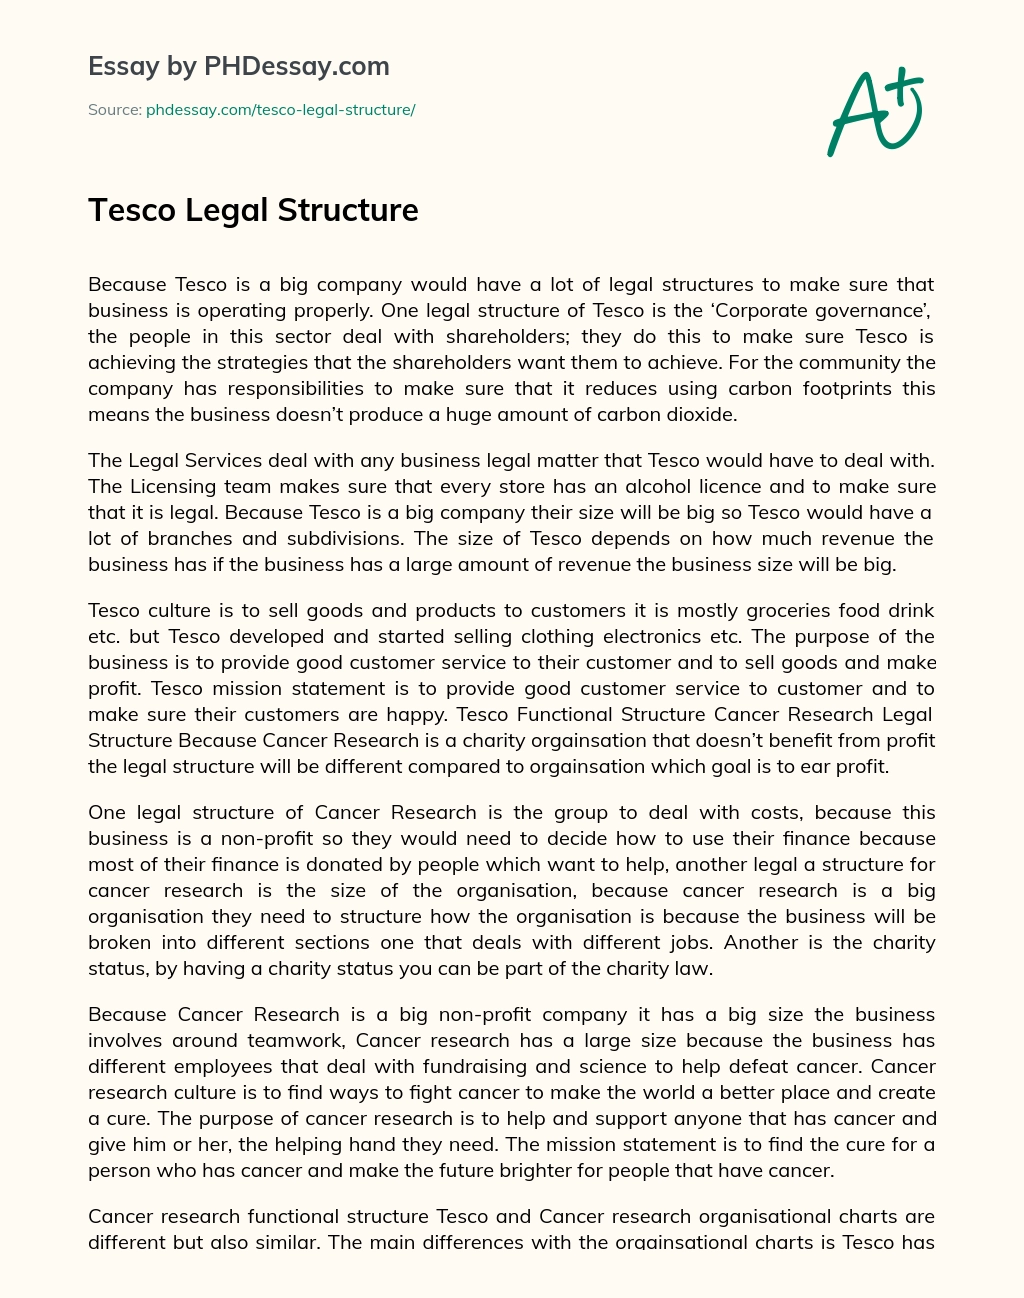 Tesco Legal Structure essay